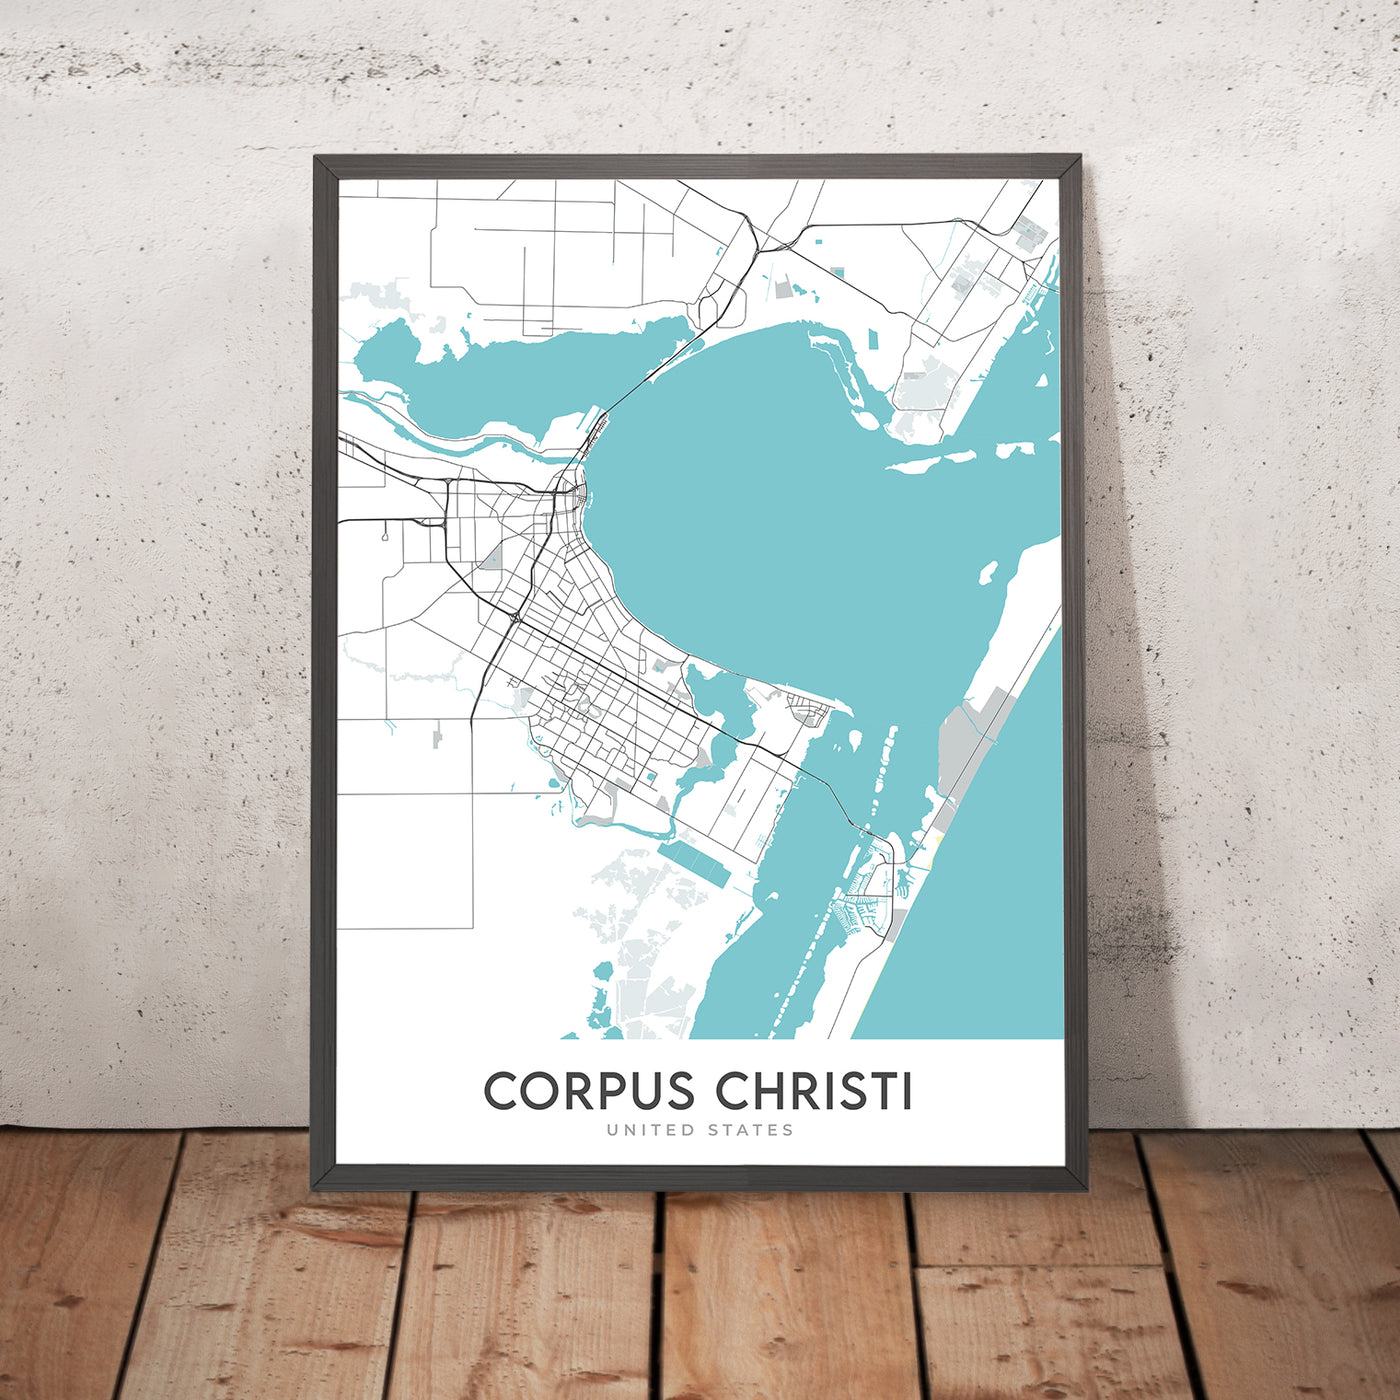 Moderner Stadtplan von Corpus Christi, TX: Innenstadt, USS Lexington, Selena Museum, Padre Island, Mustang Island